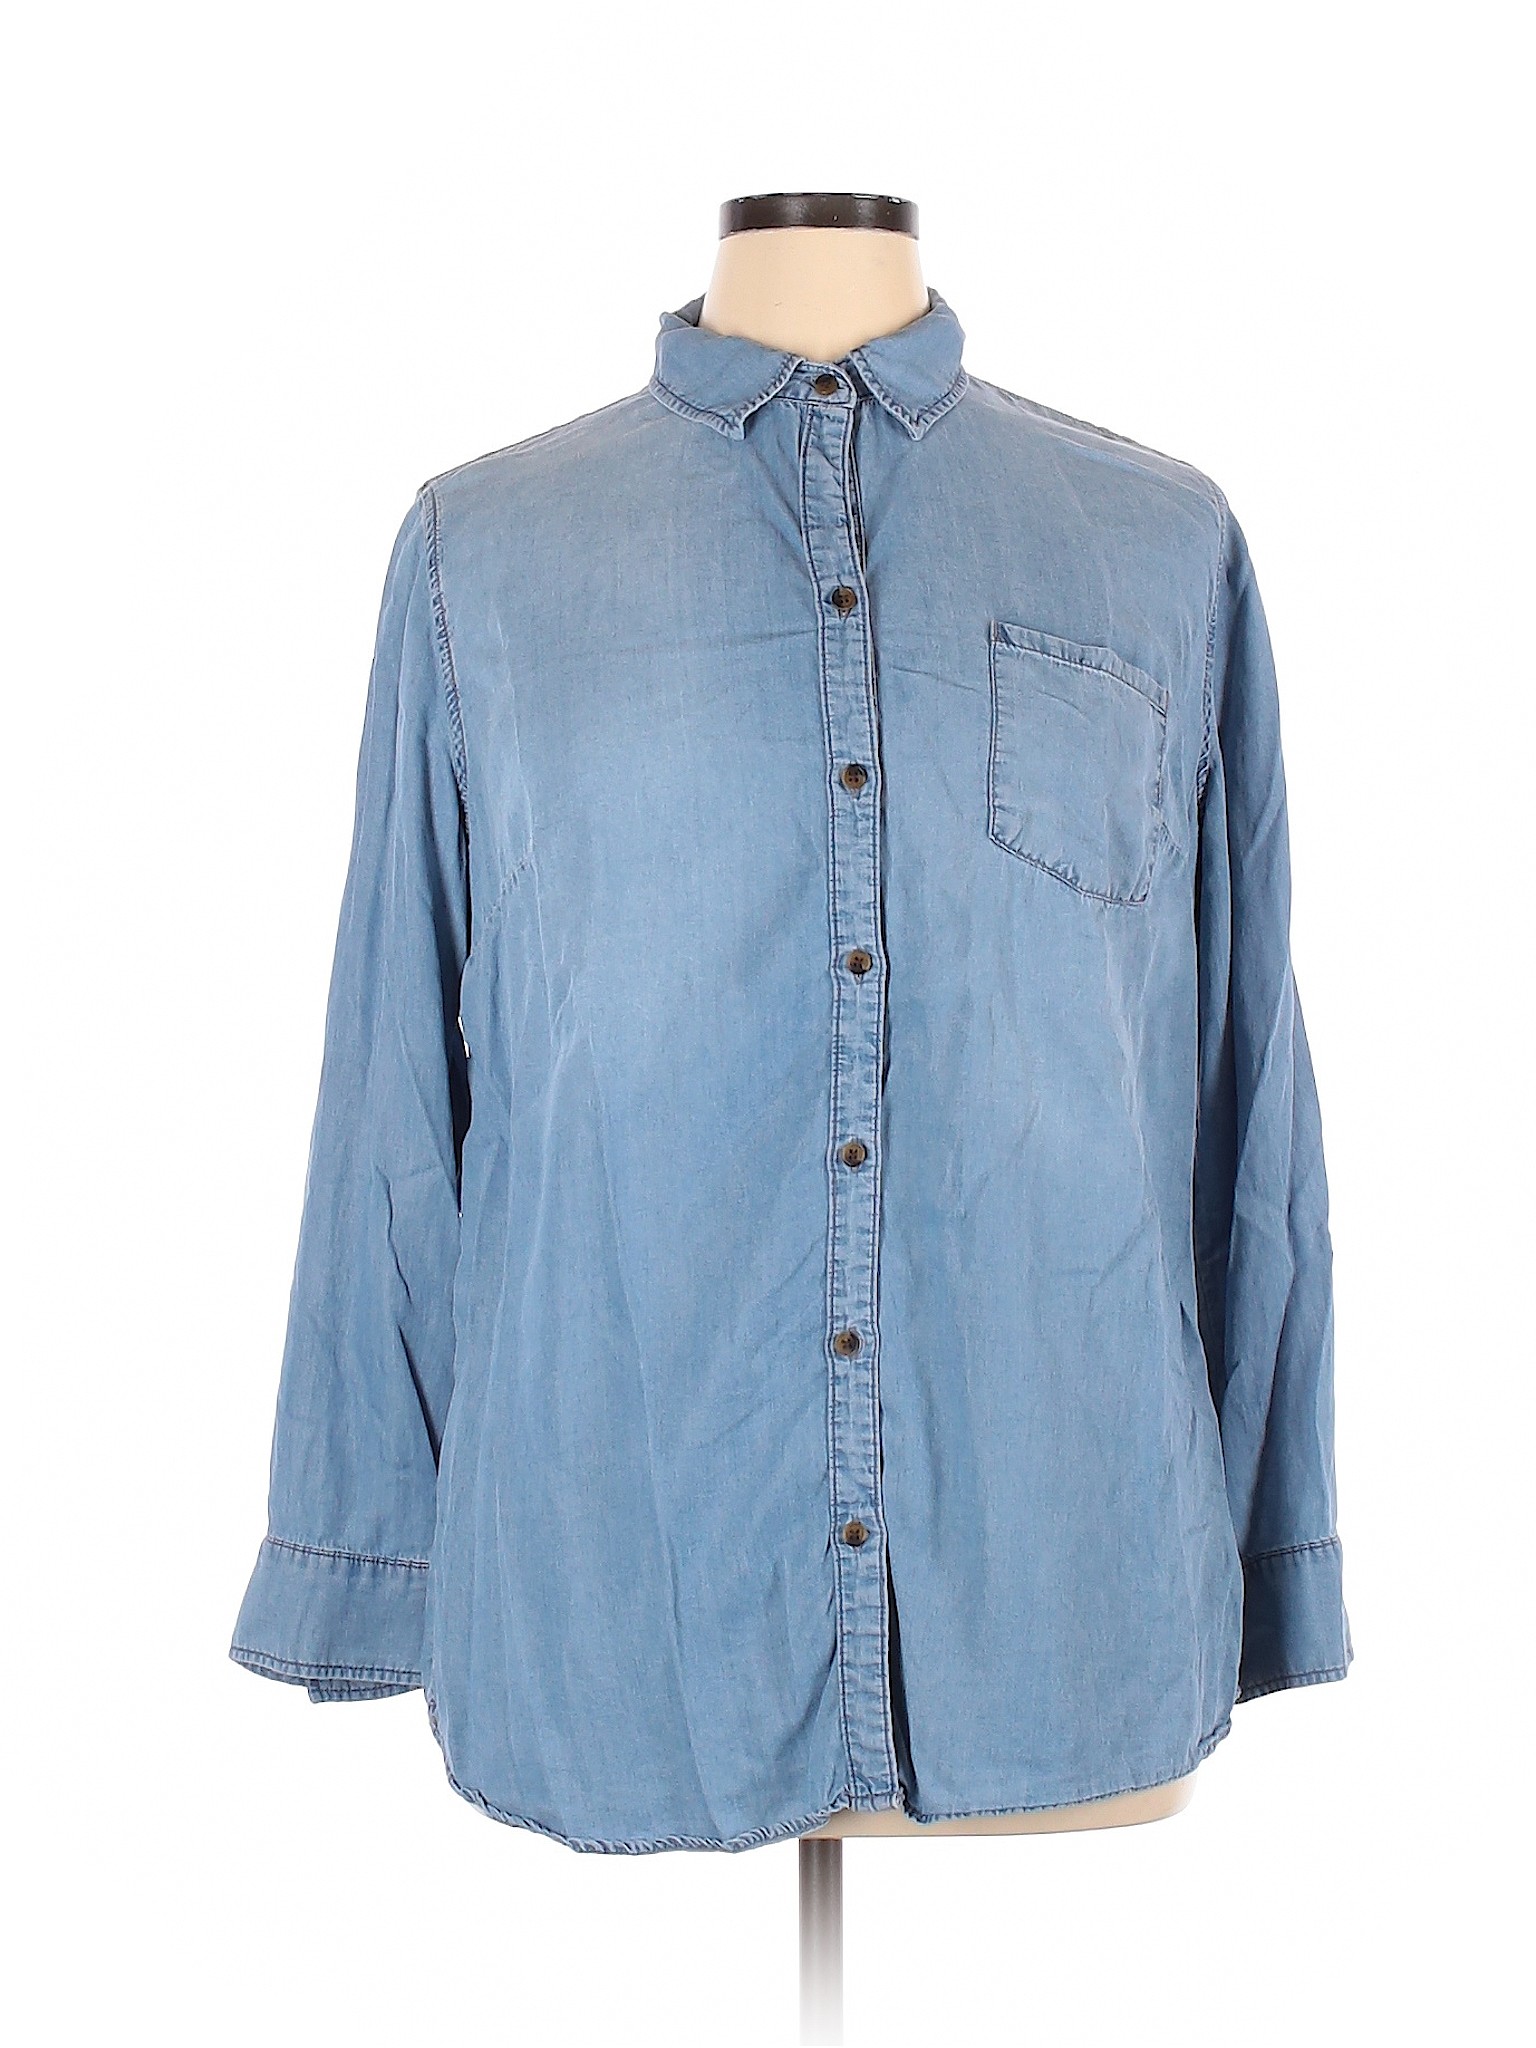 Ava & Viv Women Blue Long Sleeve Button-Down Shirt 1X Plus | eBay